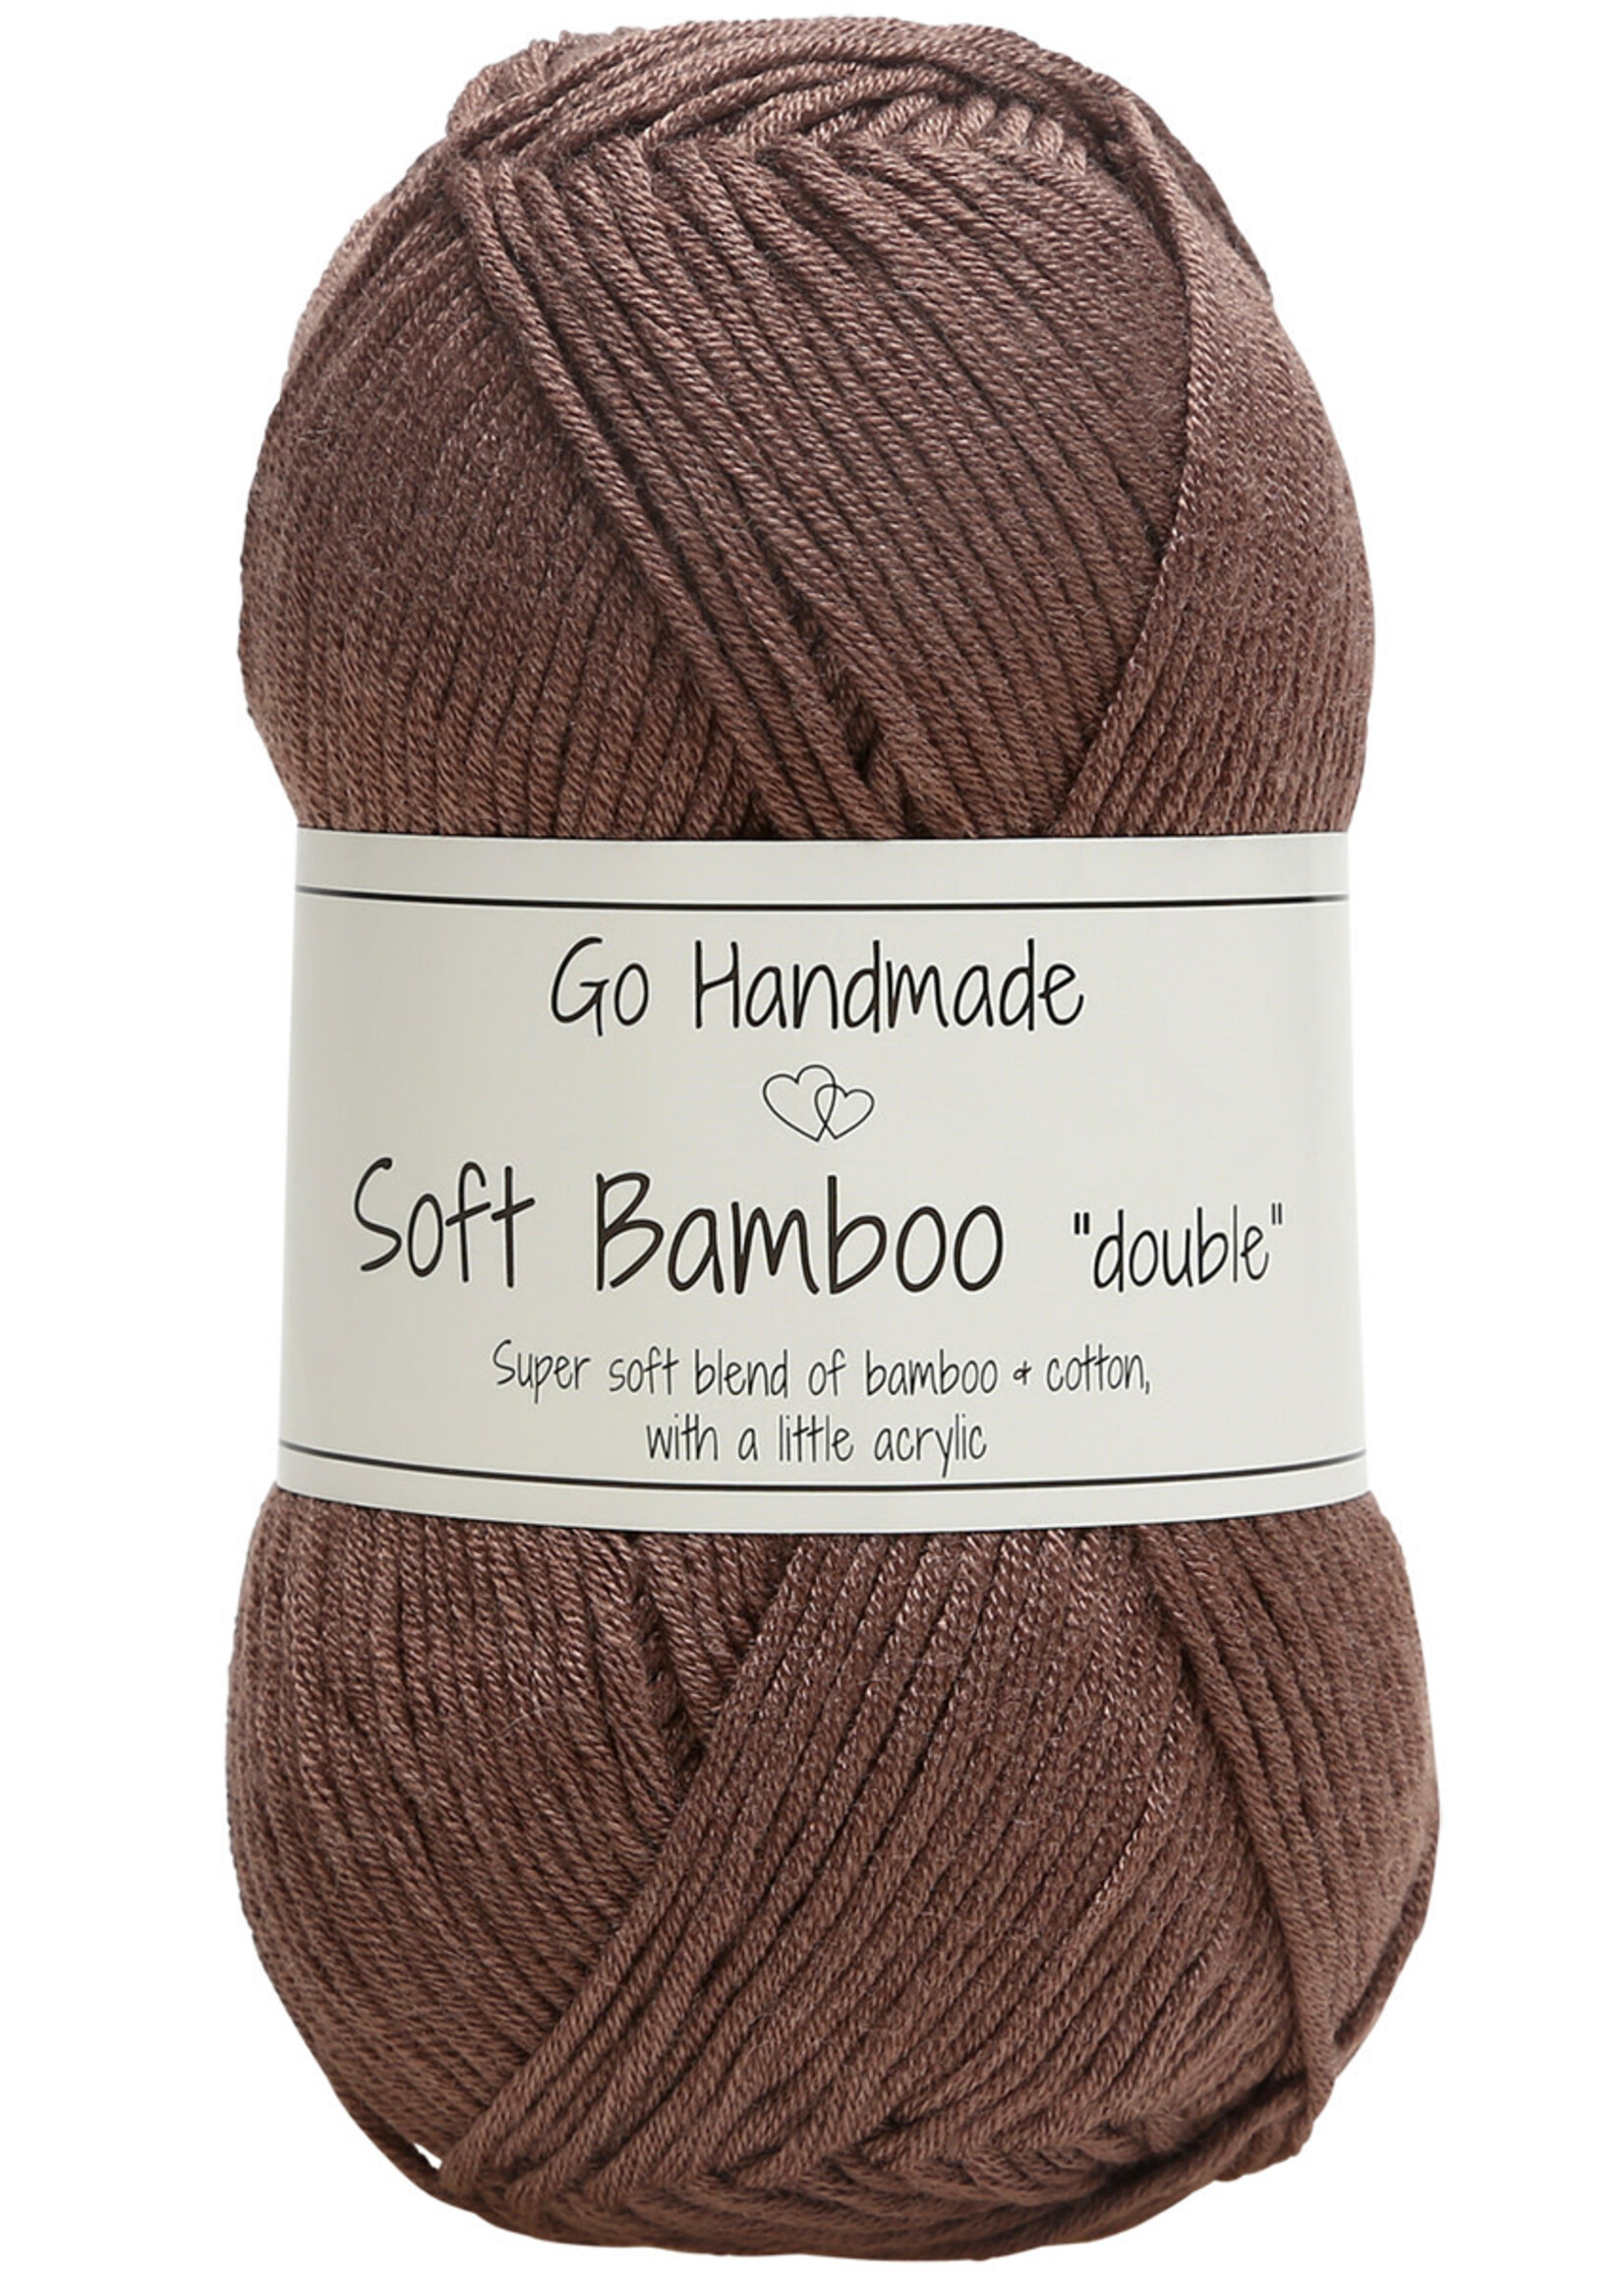 GoHandmade Soft Bamboo "double" -caramel brown